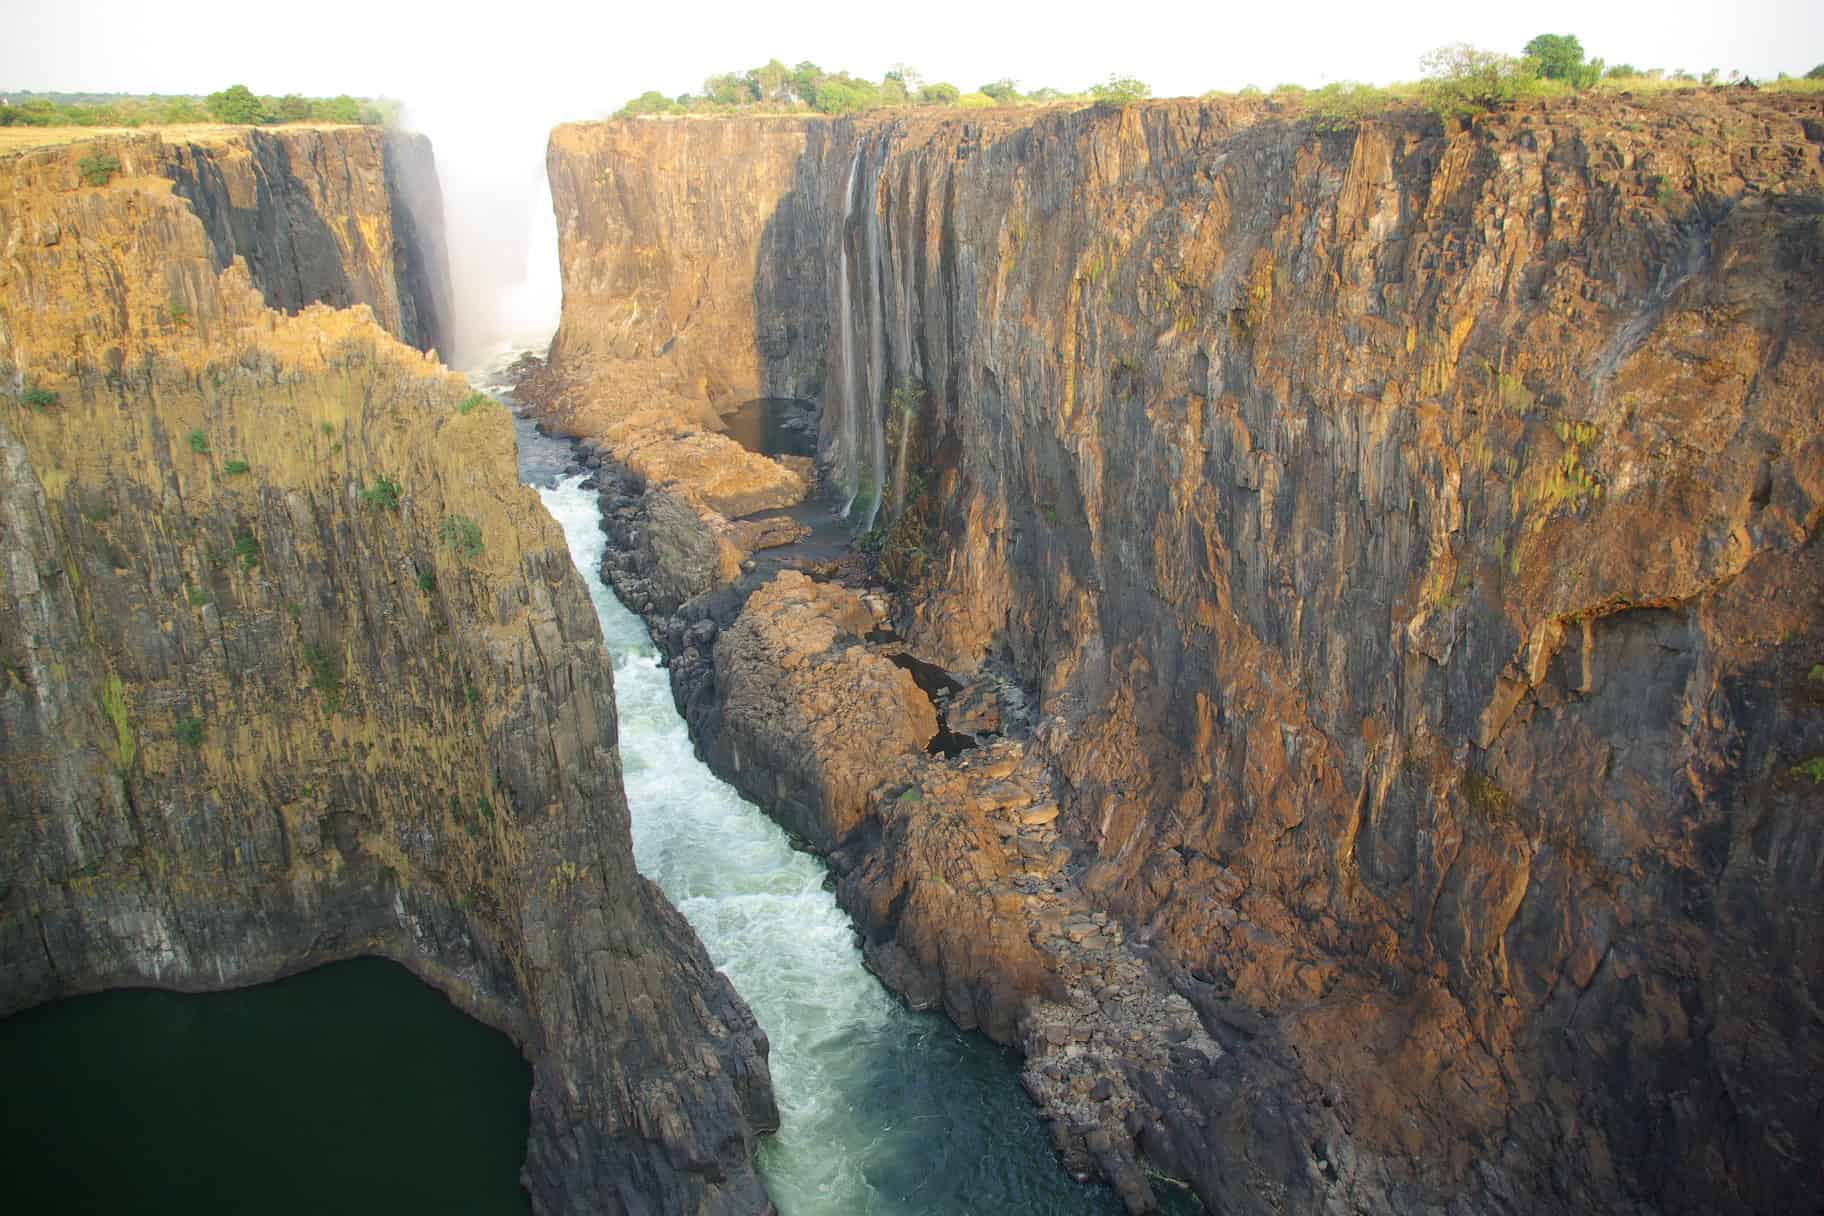 The Minus Rapid in the Bakota Gorge on the Zambezi River